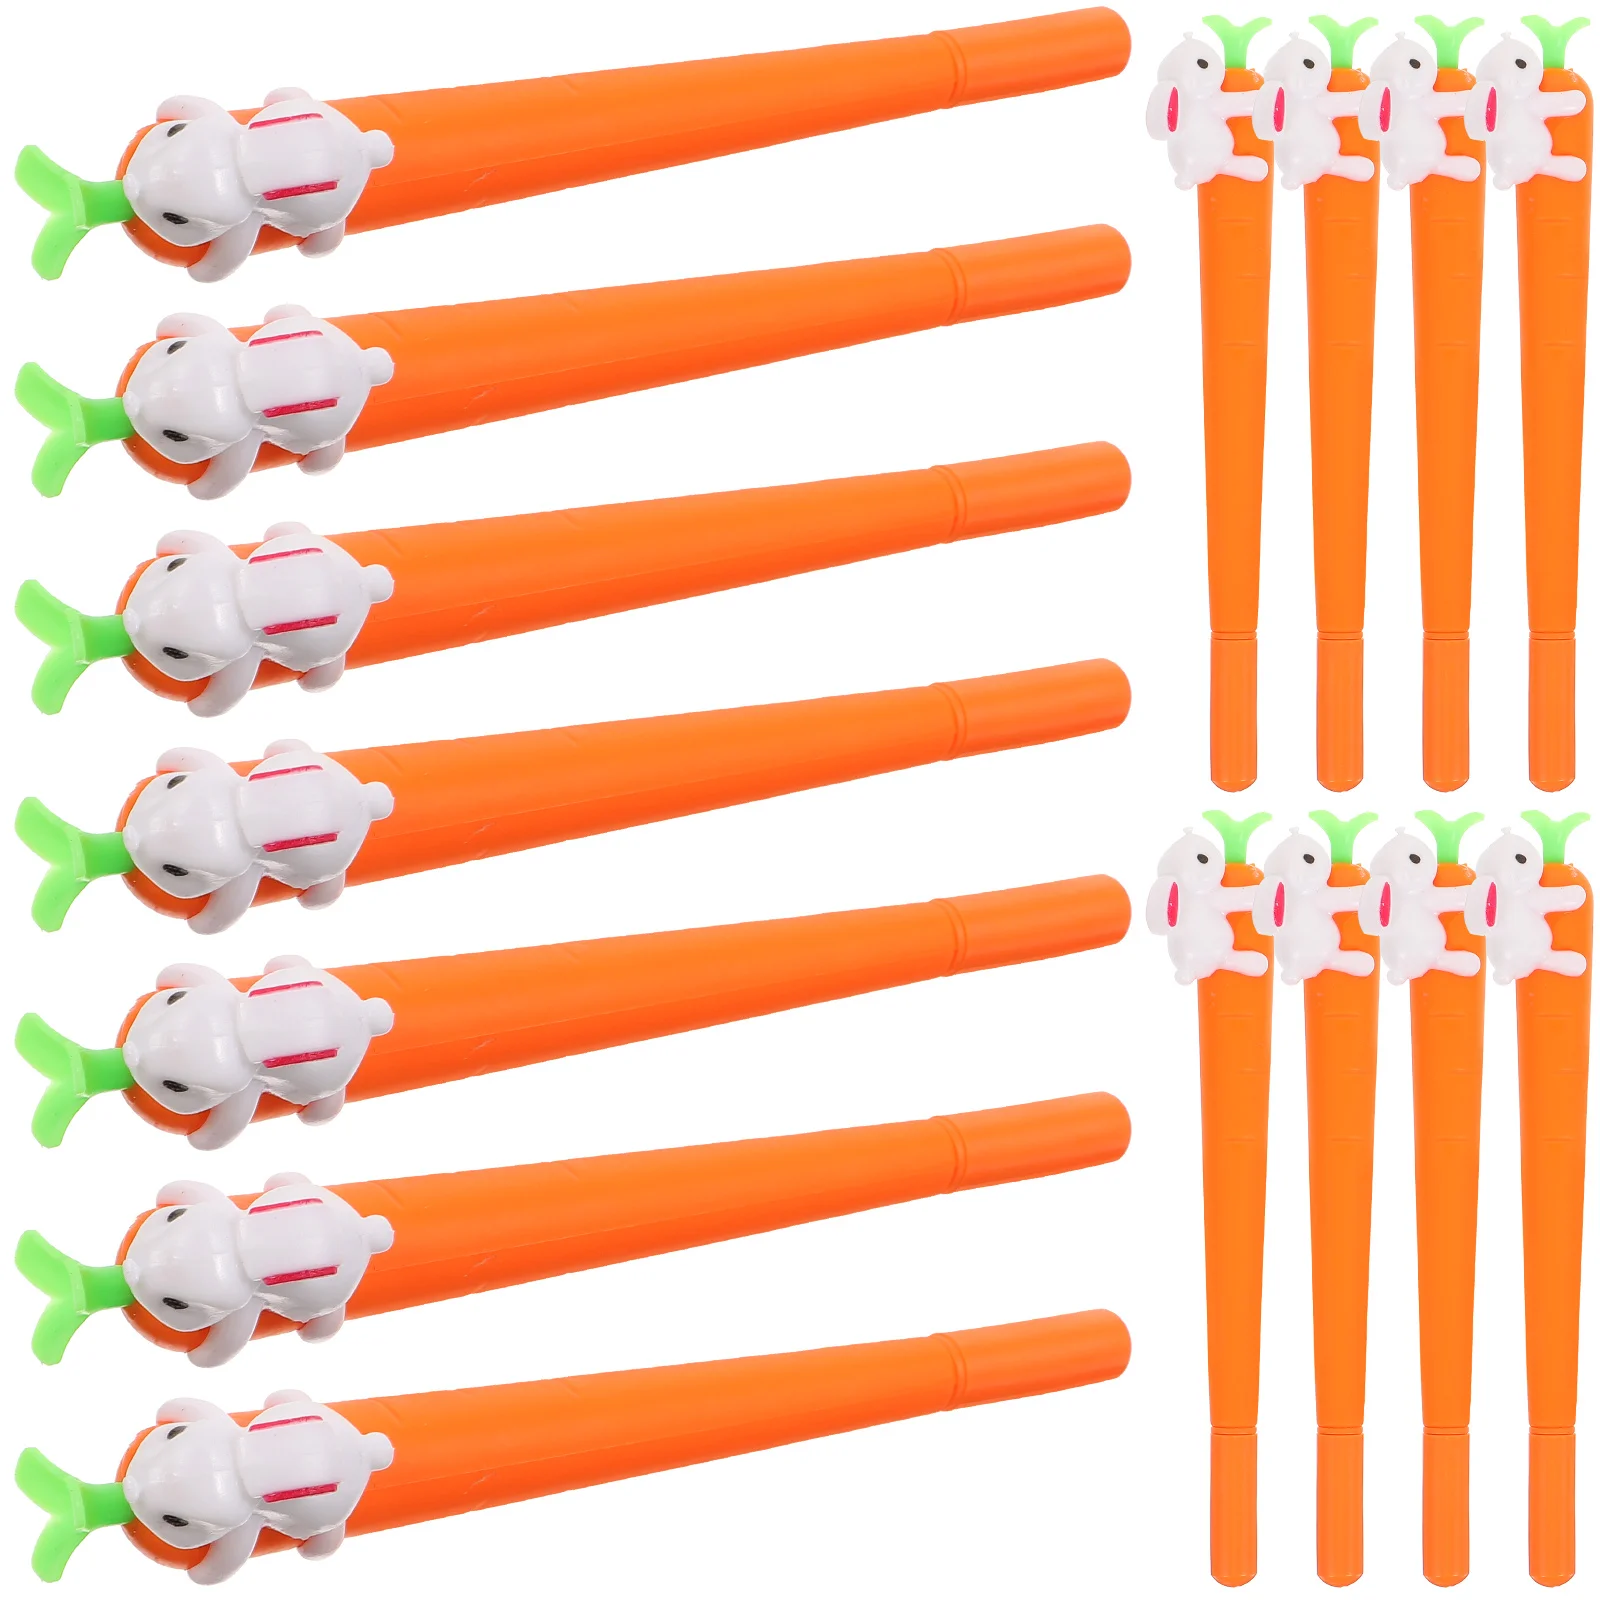 15 Pcs Carrot Pen Carrots Rabbit Pattern Stationery Gel Writing Silica Ink Shape Pens Student 05mm